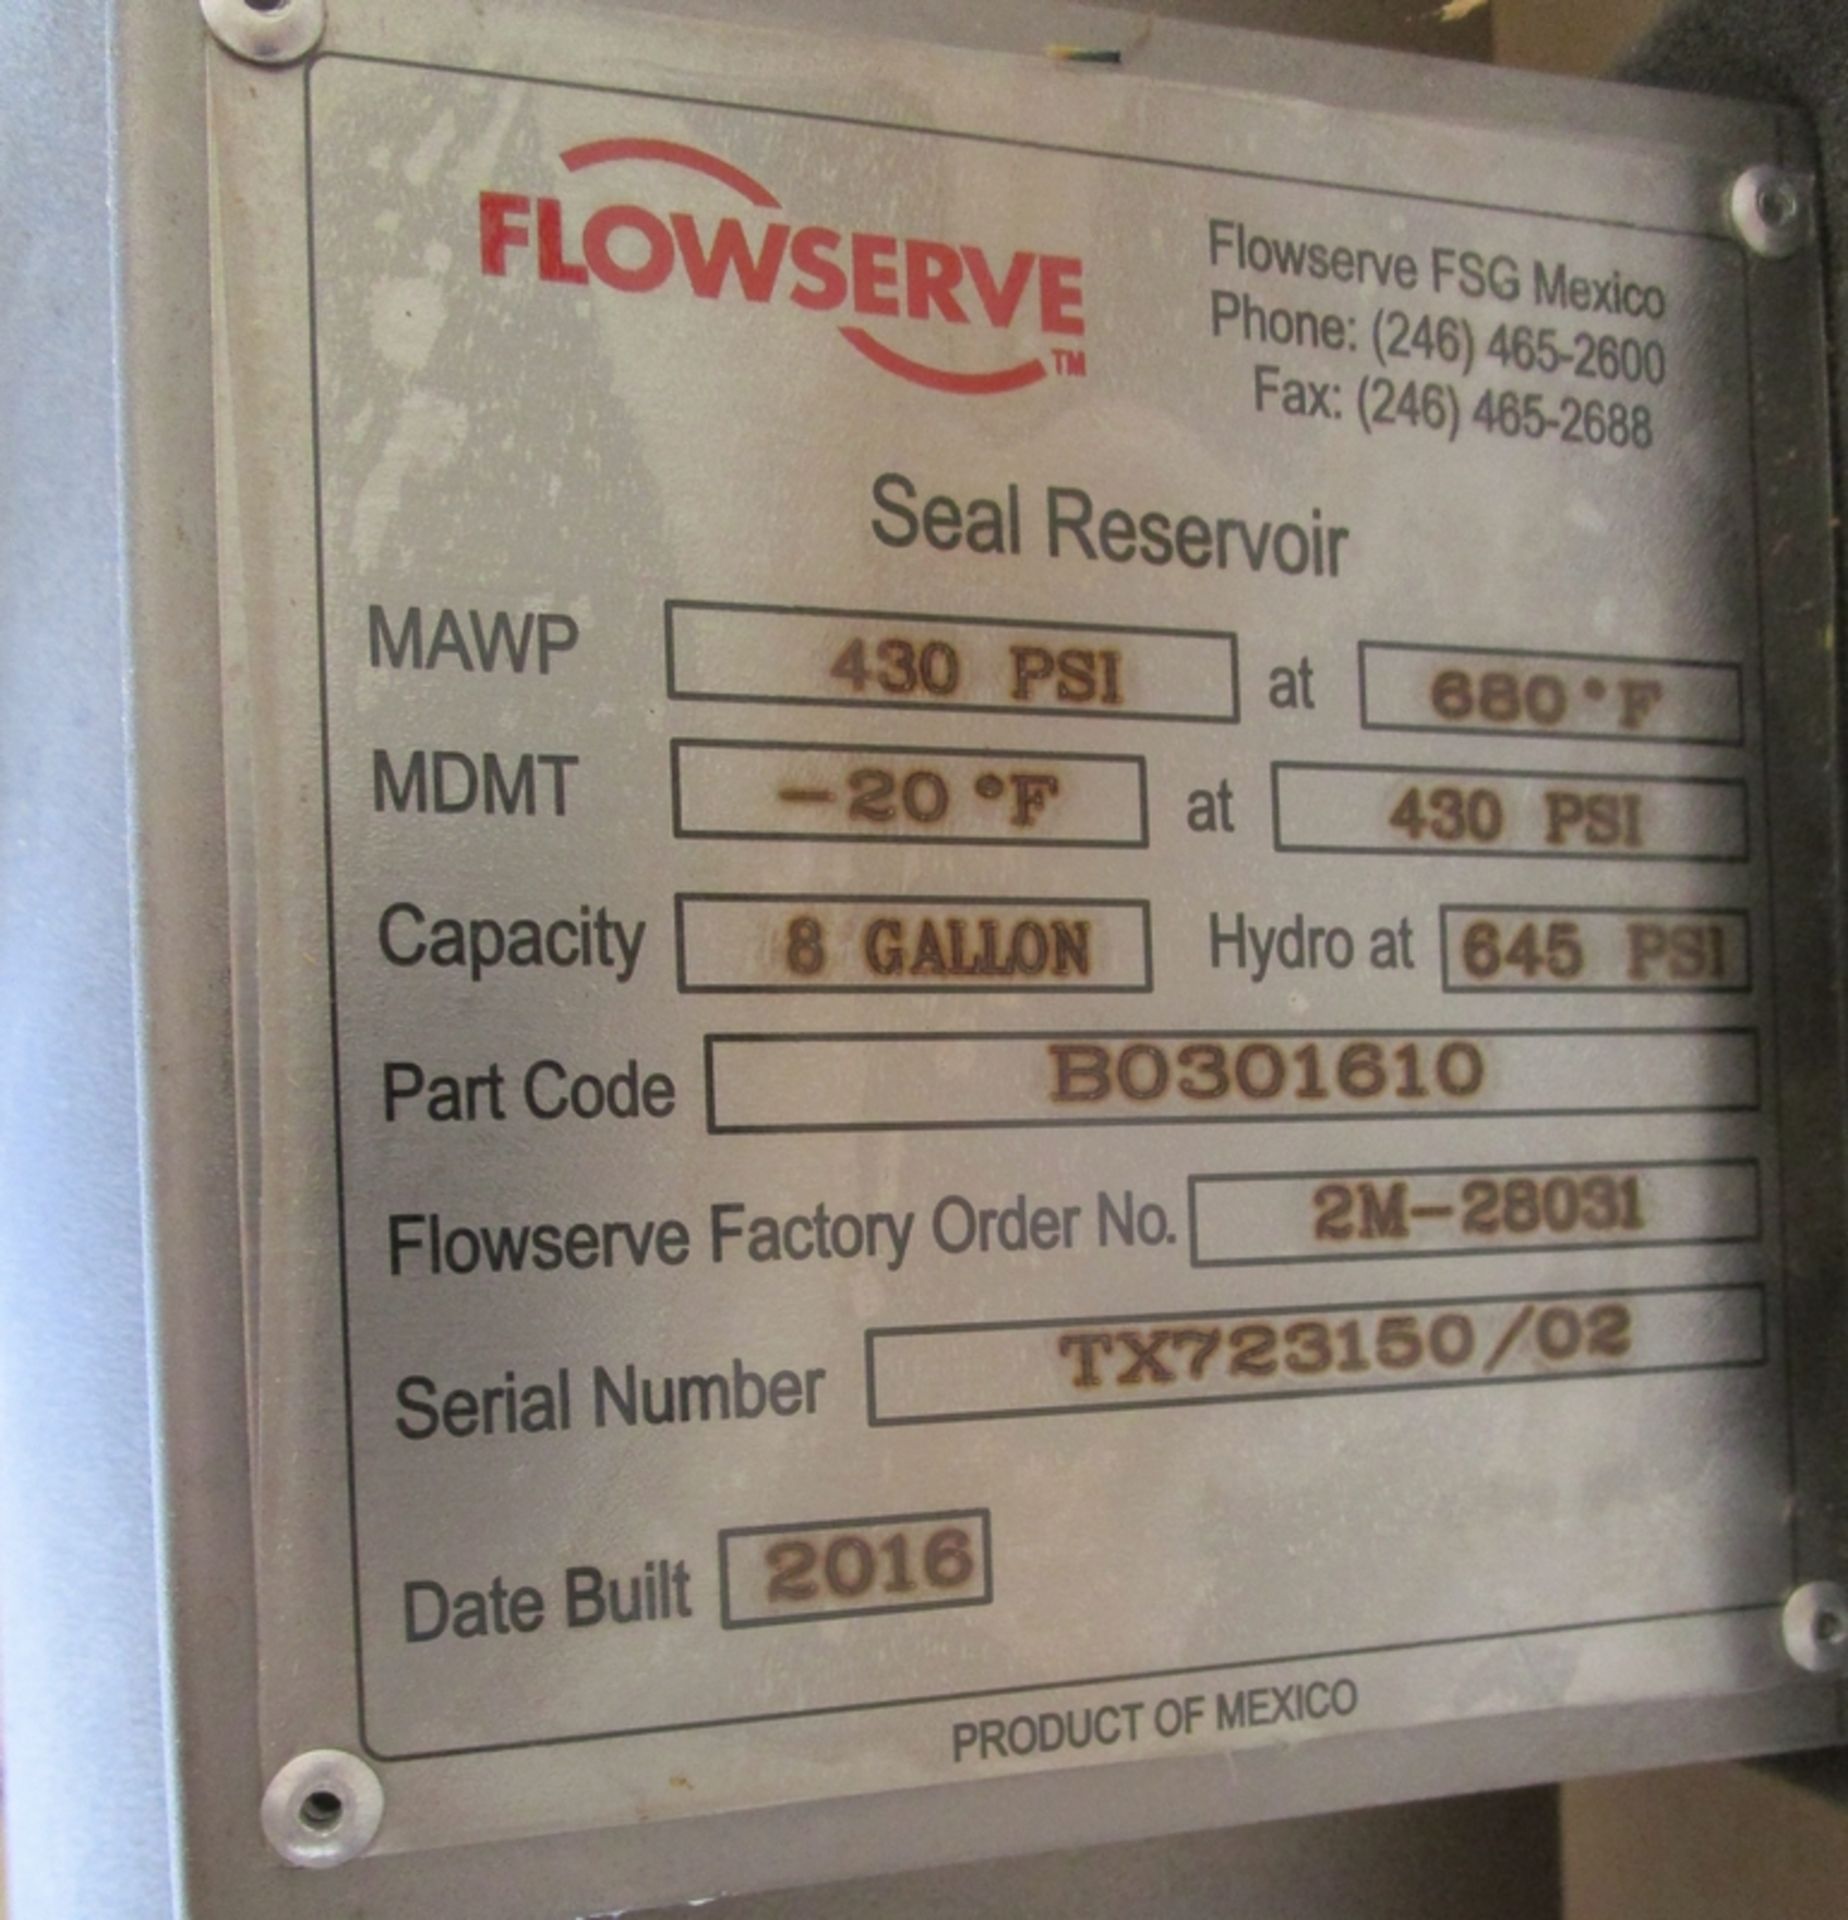 Unused Flowserve 2M-28031 Seal Reservoir , 8-Gallon Capacity - Image 5 of 6